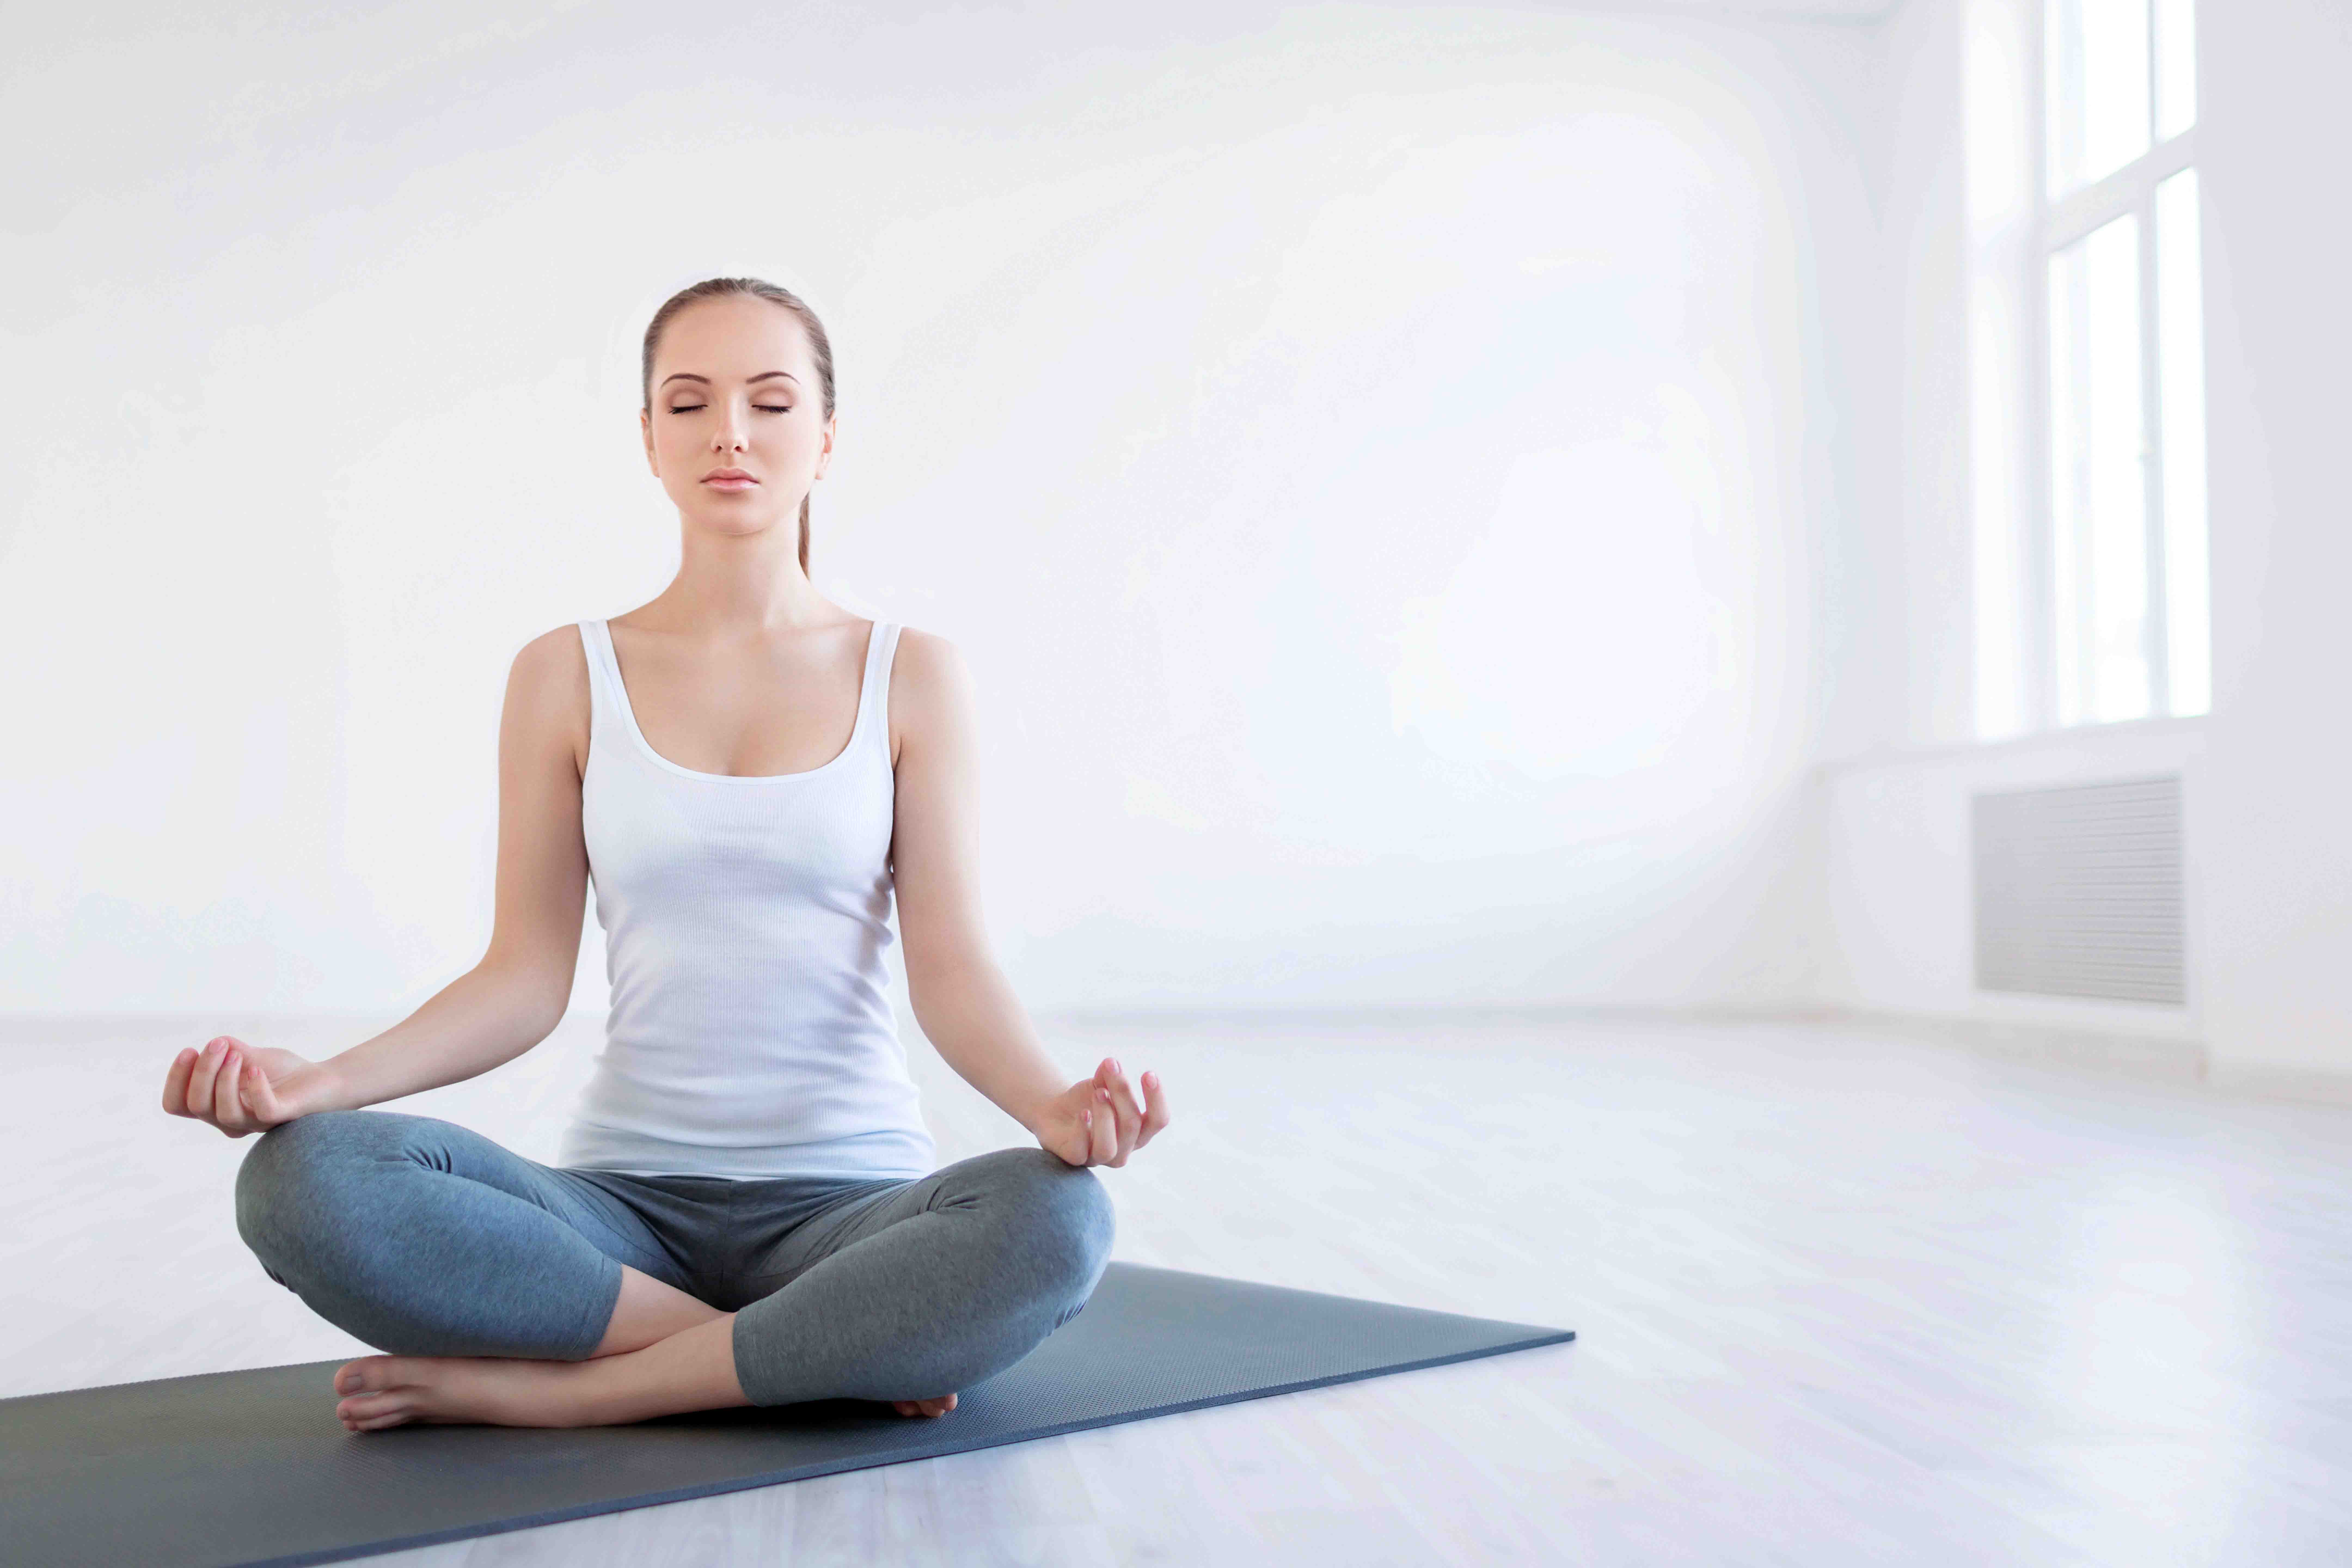 Guided meditation. Студия медитации. Девушка йога. Йога для женщин. Девушка медитирует.